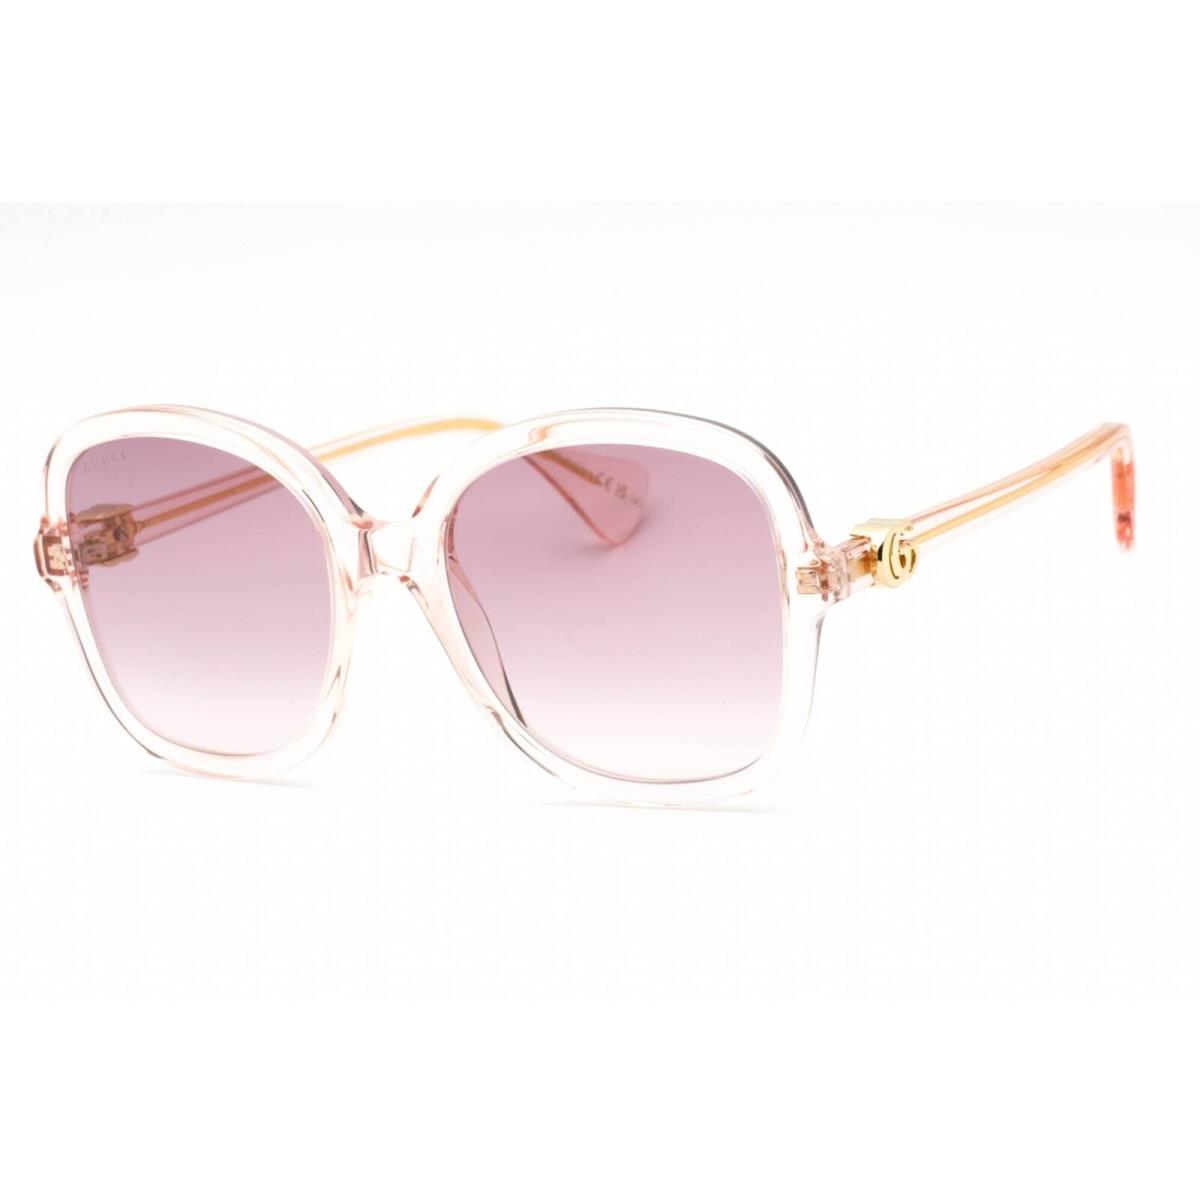 Gucci Women`s Sunglasses Pink Plastic Butterfly Shape Full Rim Frame GG1178S 005